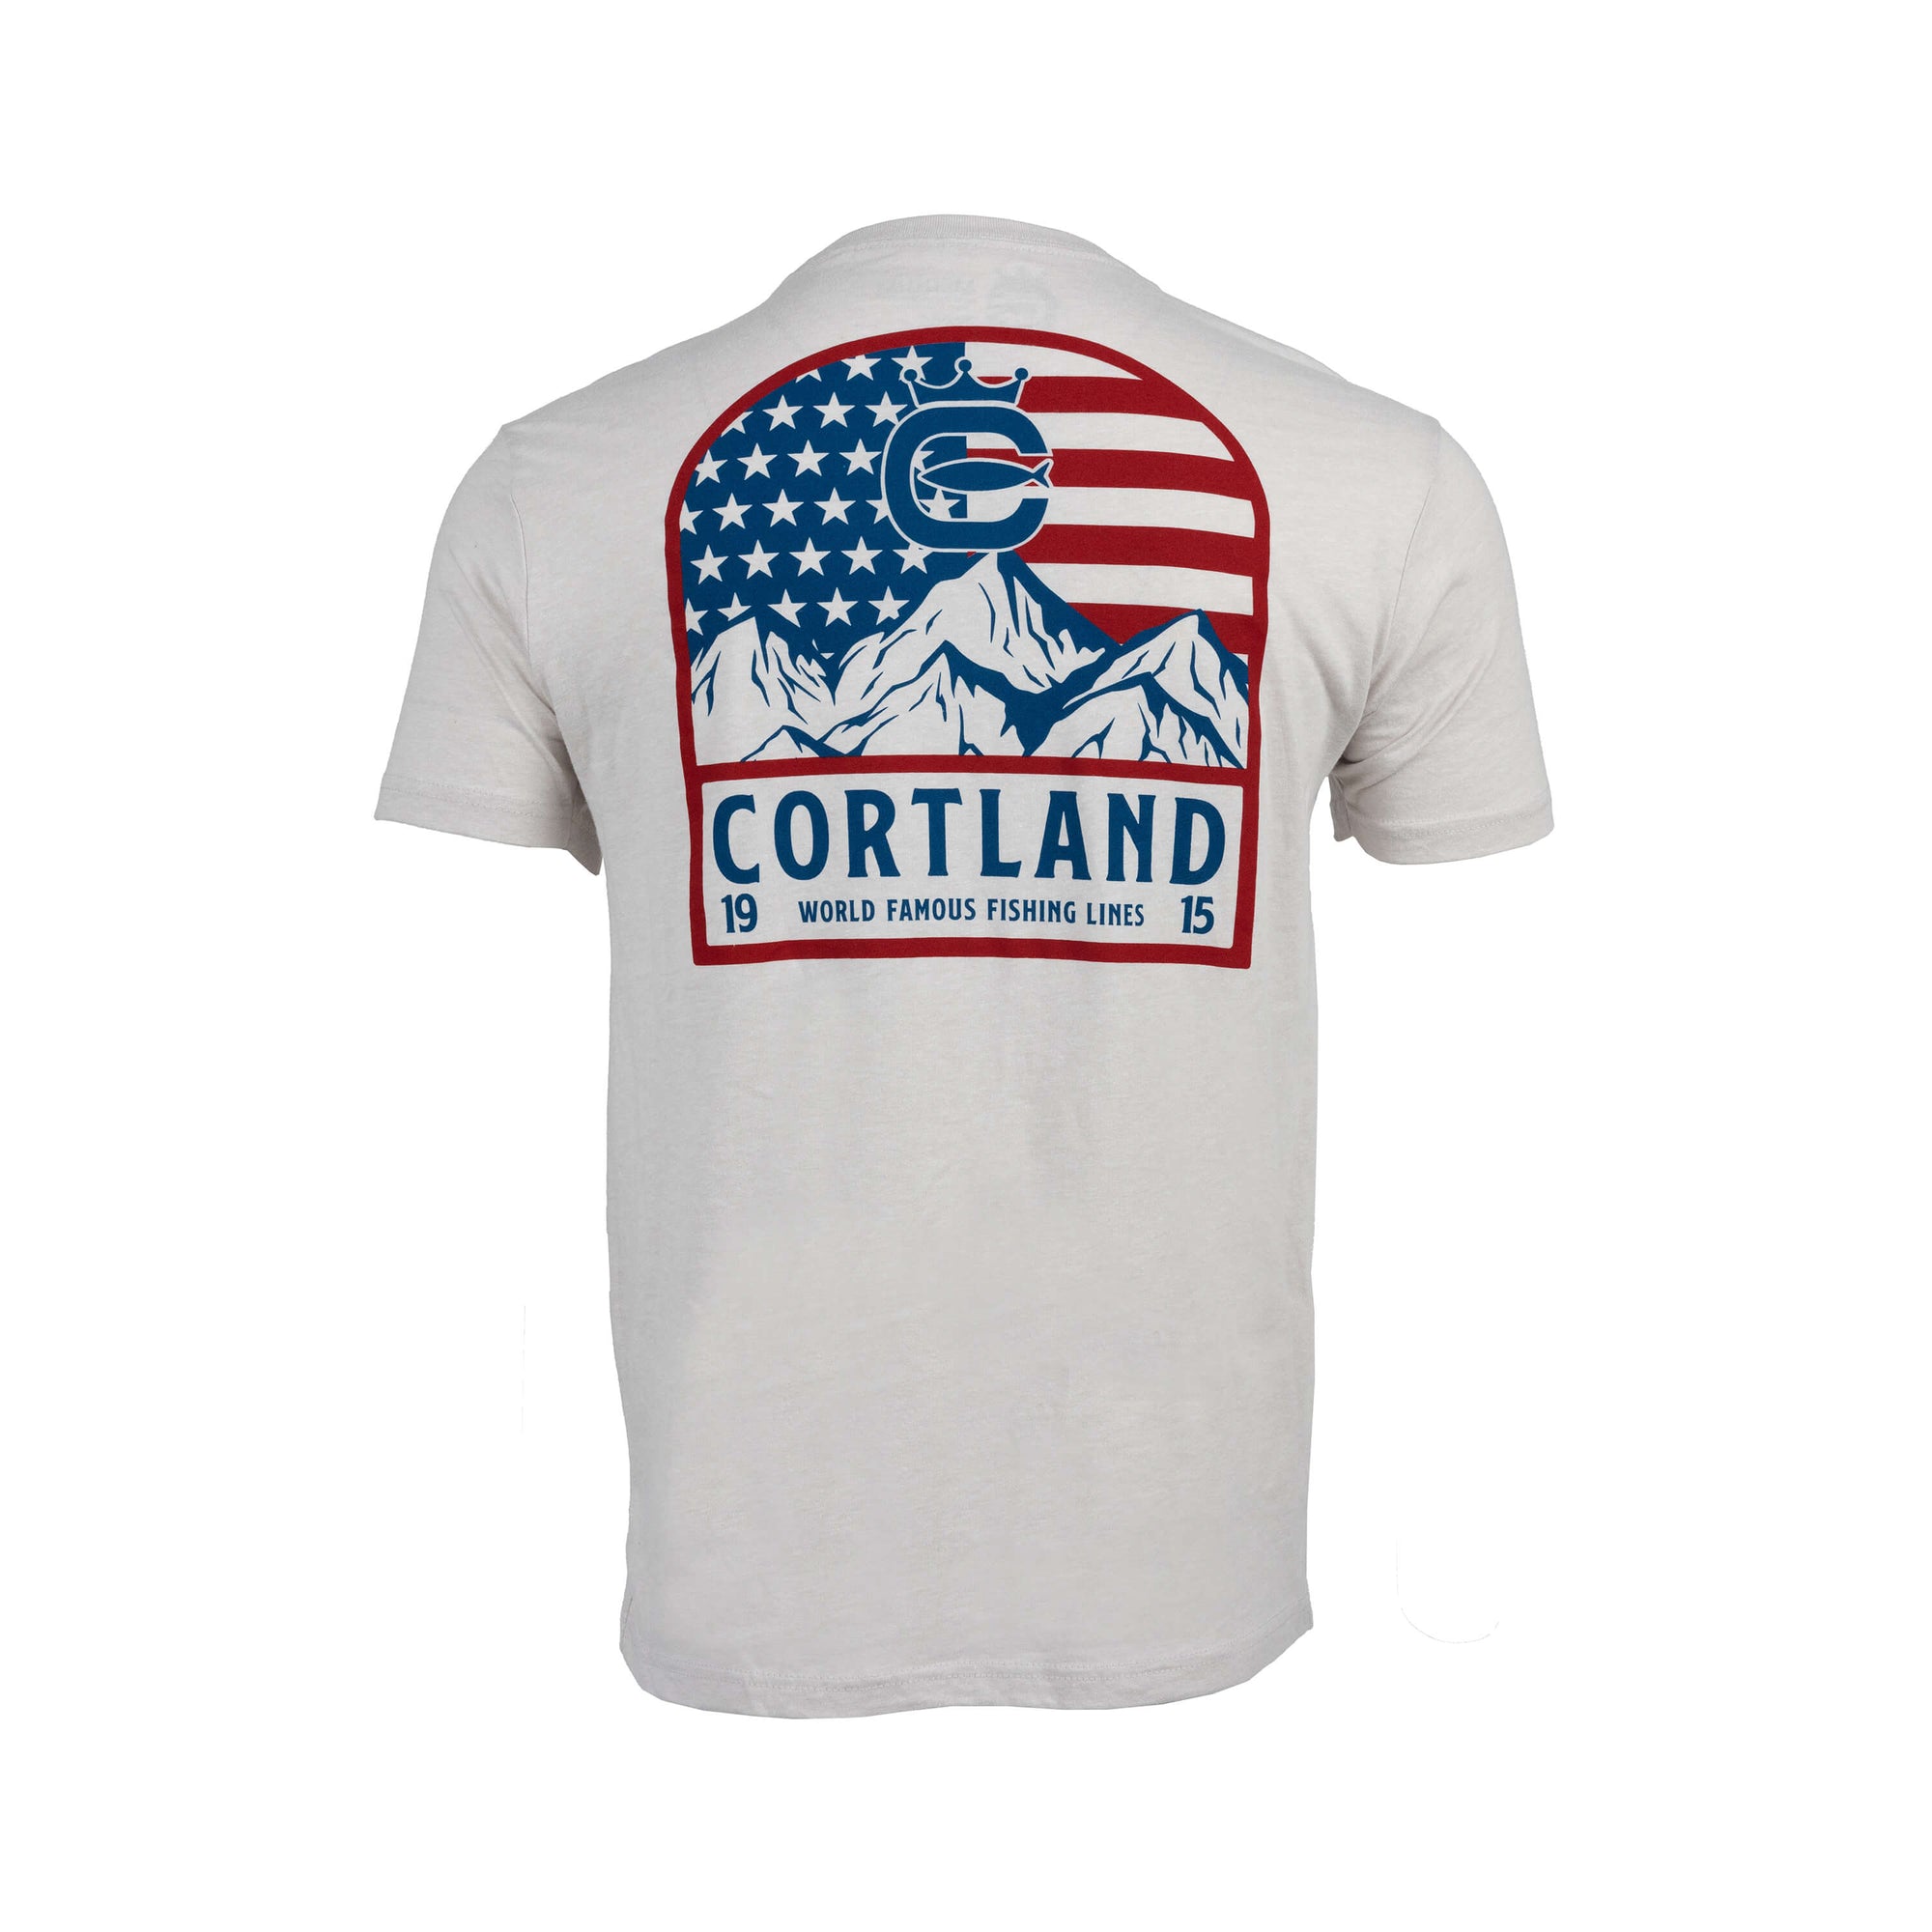 Back view of Cortland USA Mountain T-Shirt